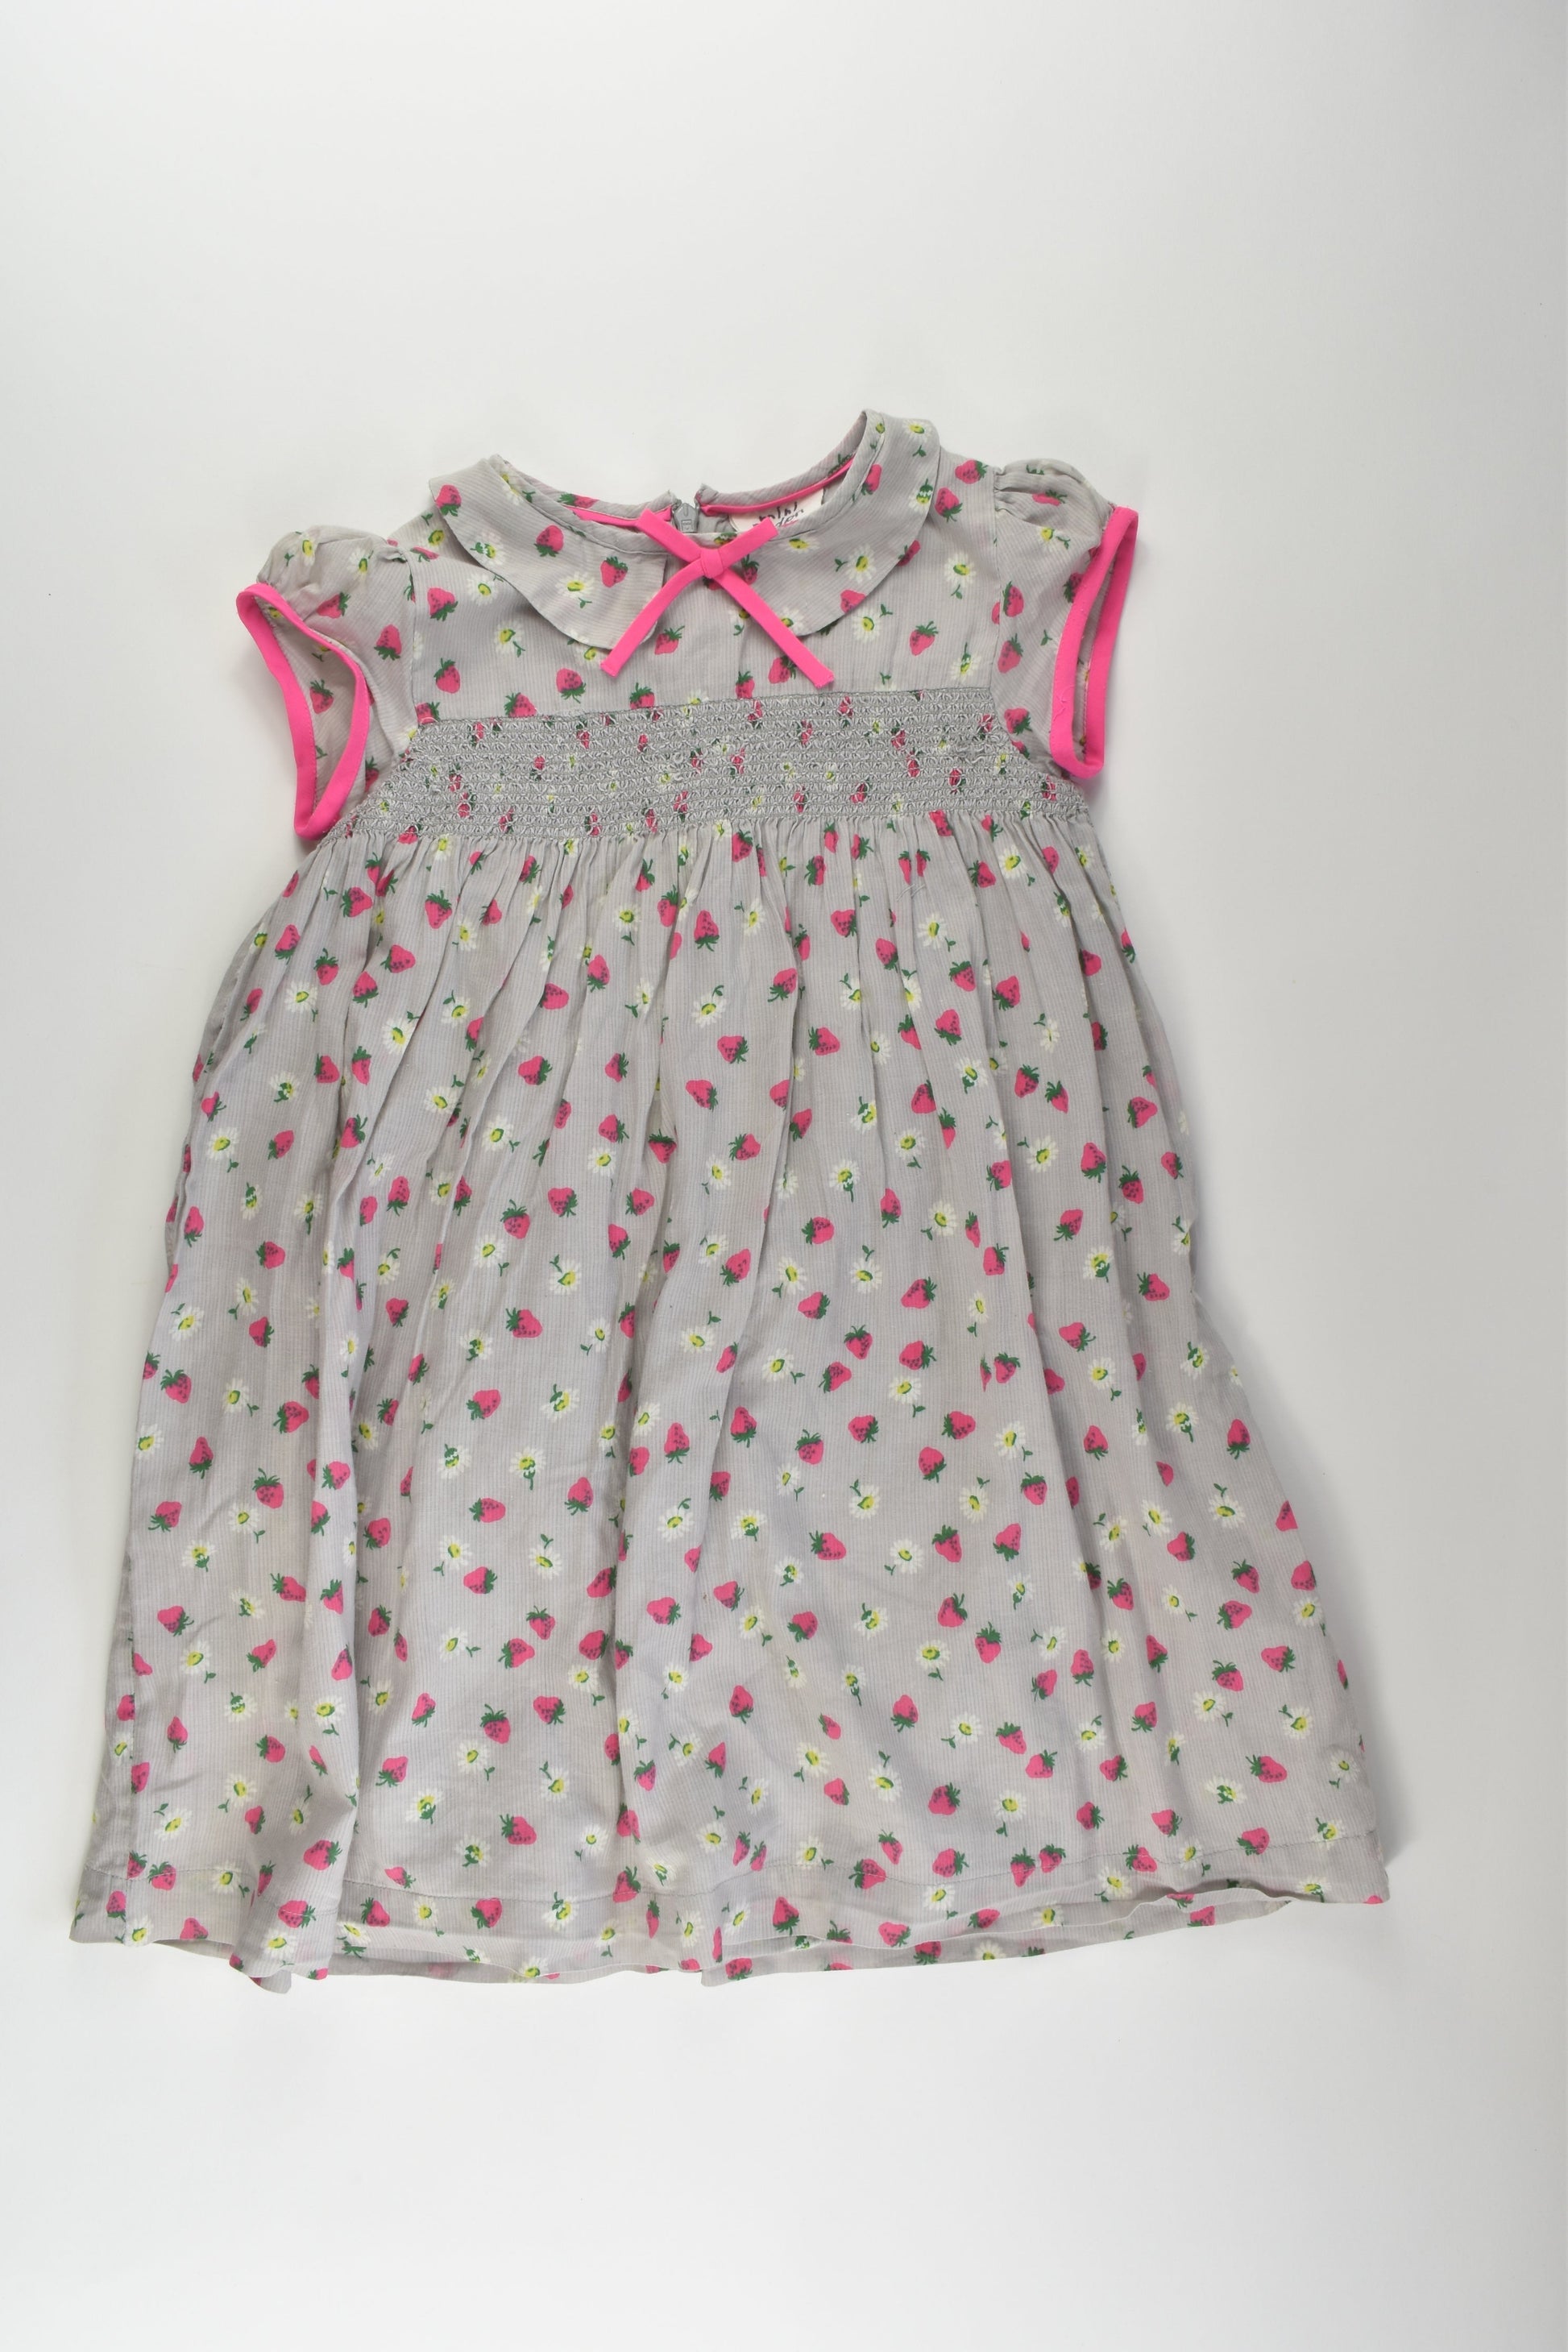 Mini Boden Size 5-6 Lined Strawberry Dress